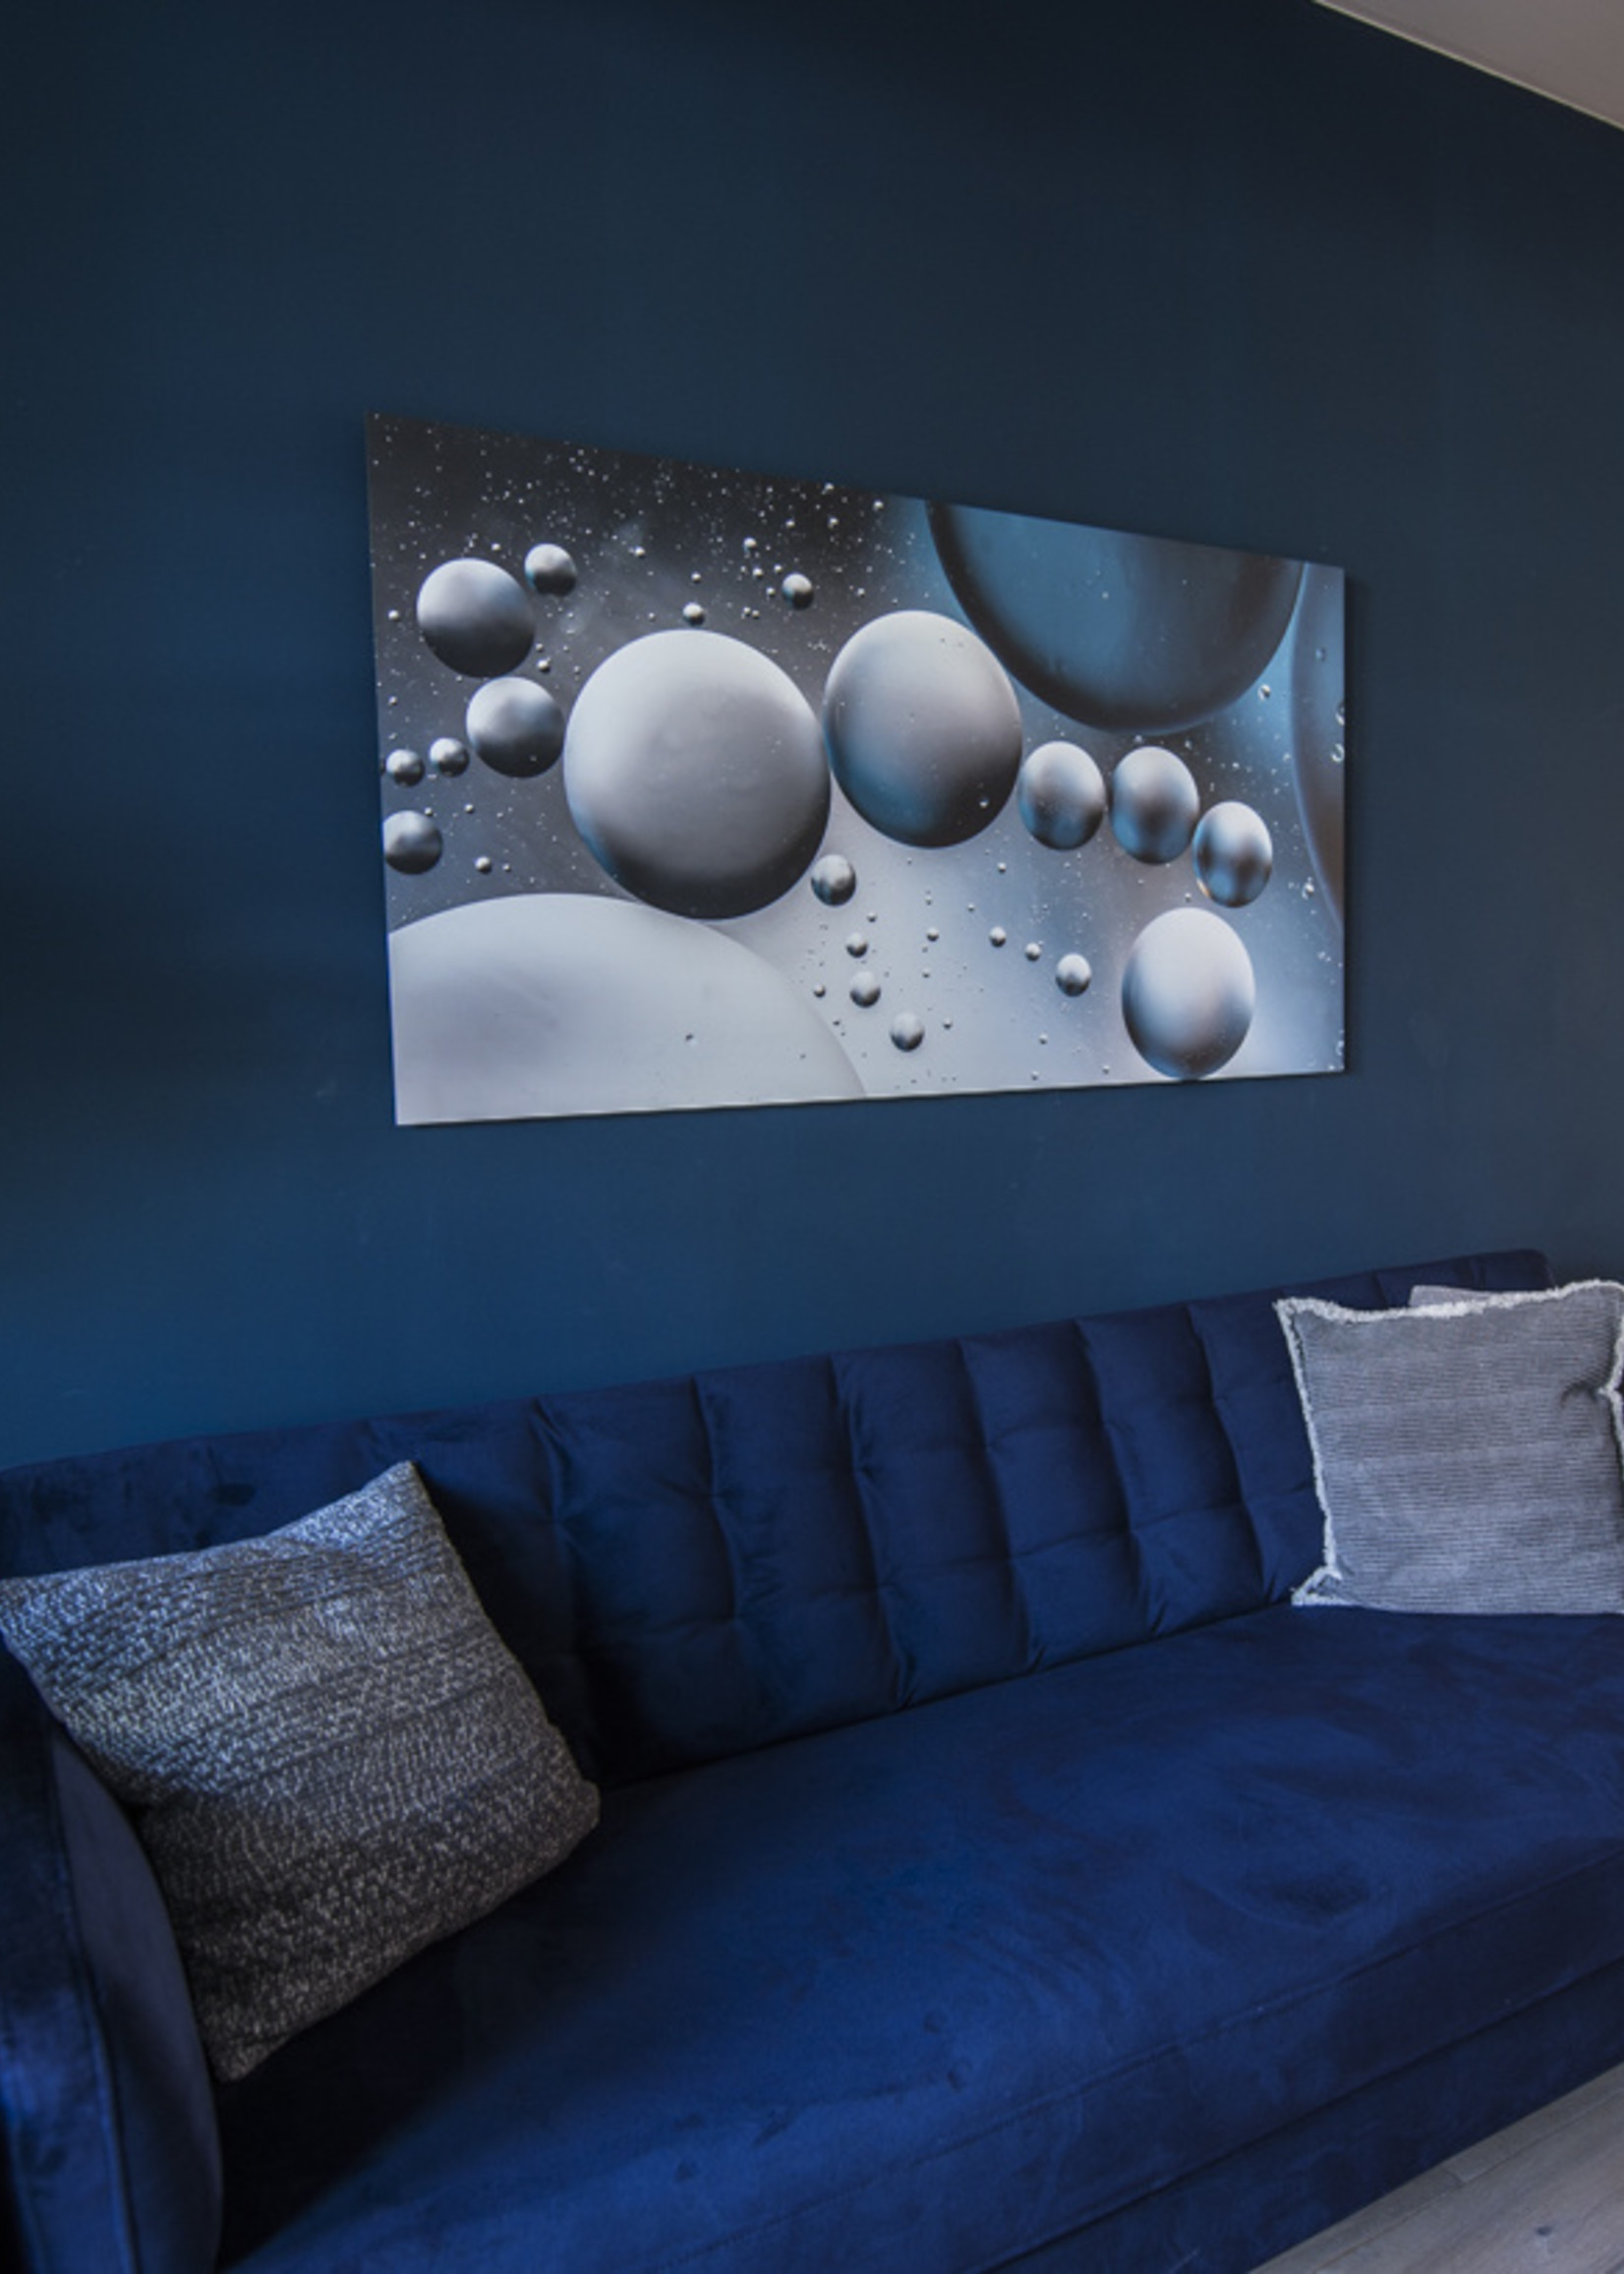 Frans van Steijn Wall photo "Bubble Art # 1" Aluminum on Dibond 120 cm